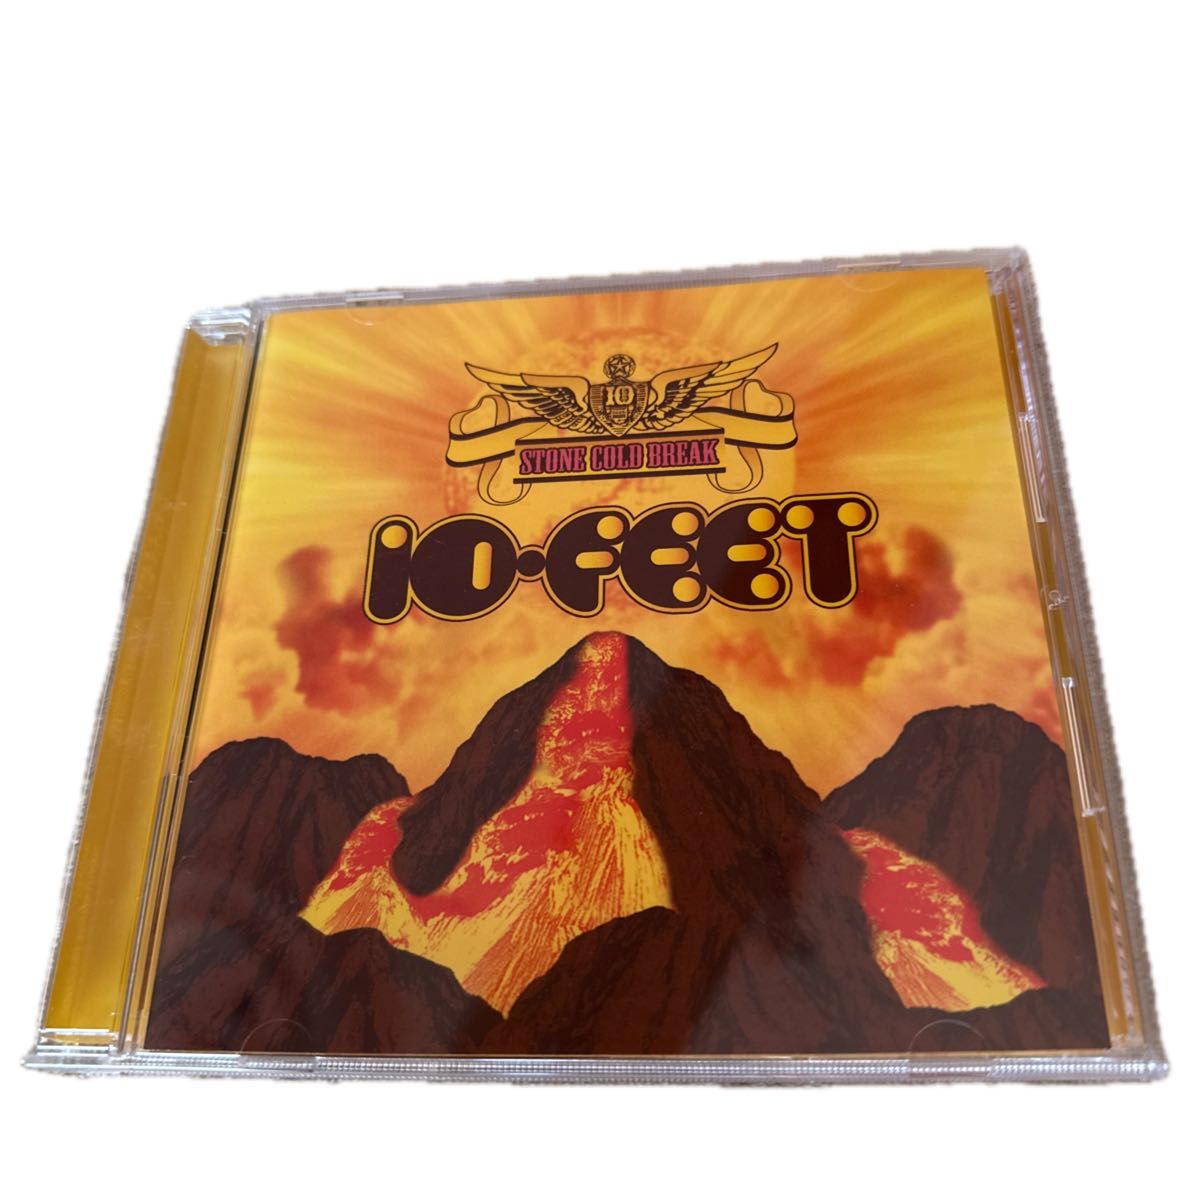 10-FEET CD 